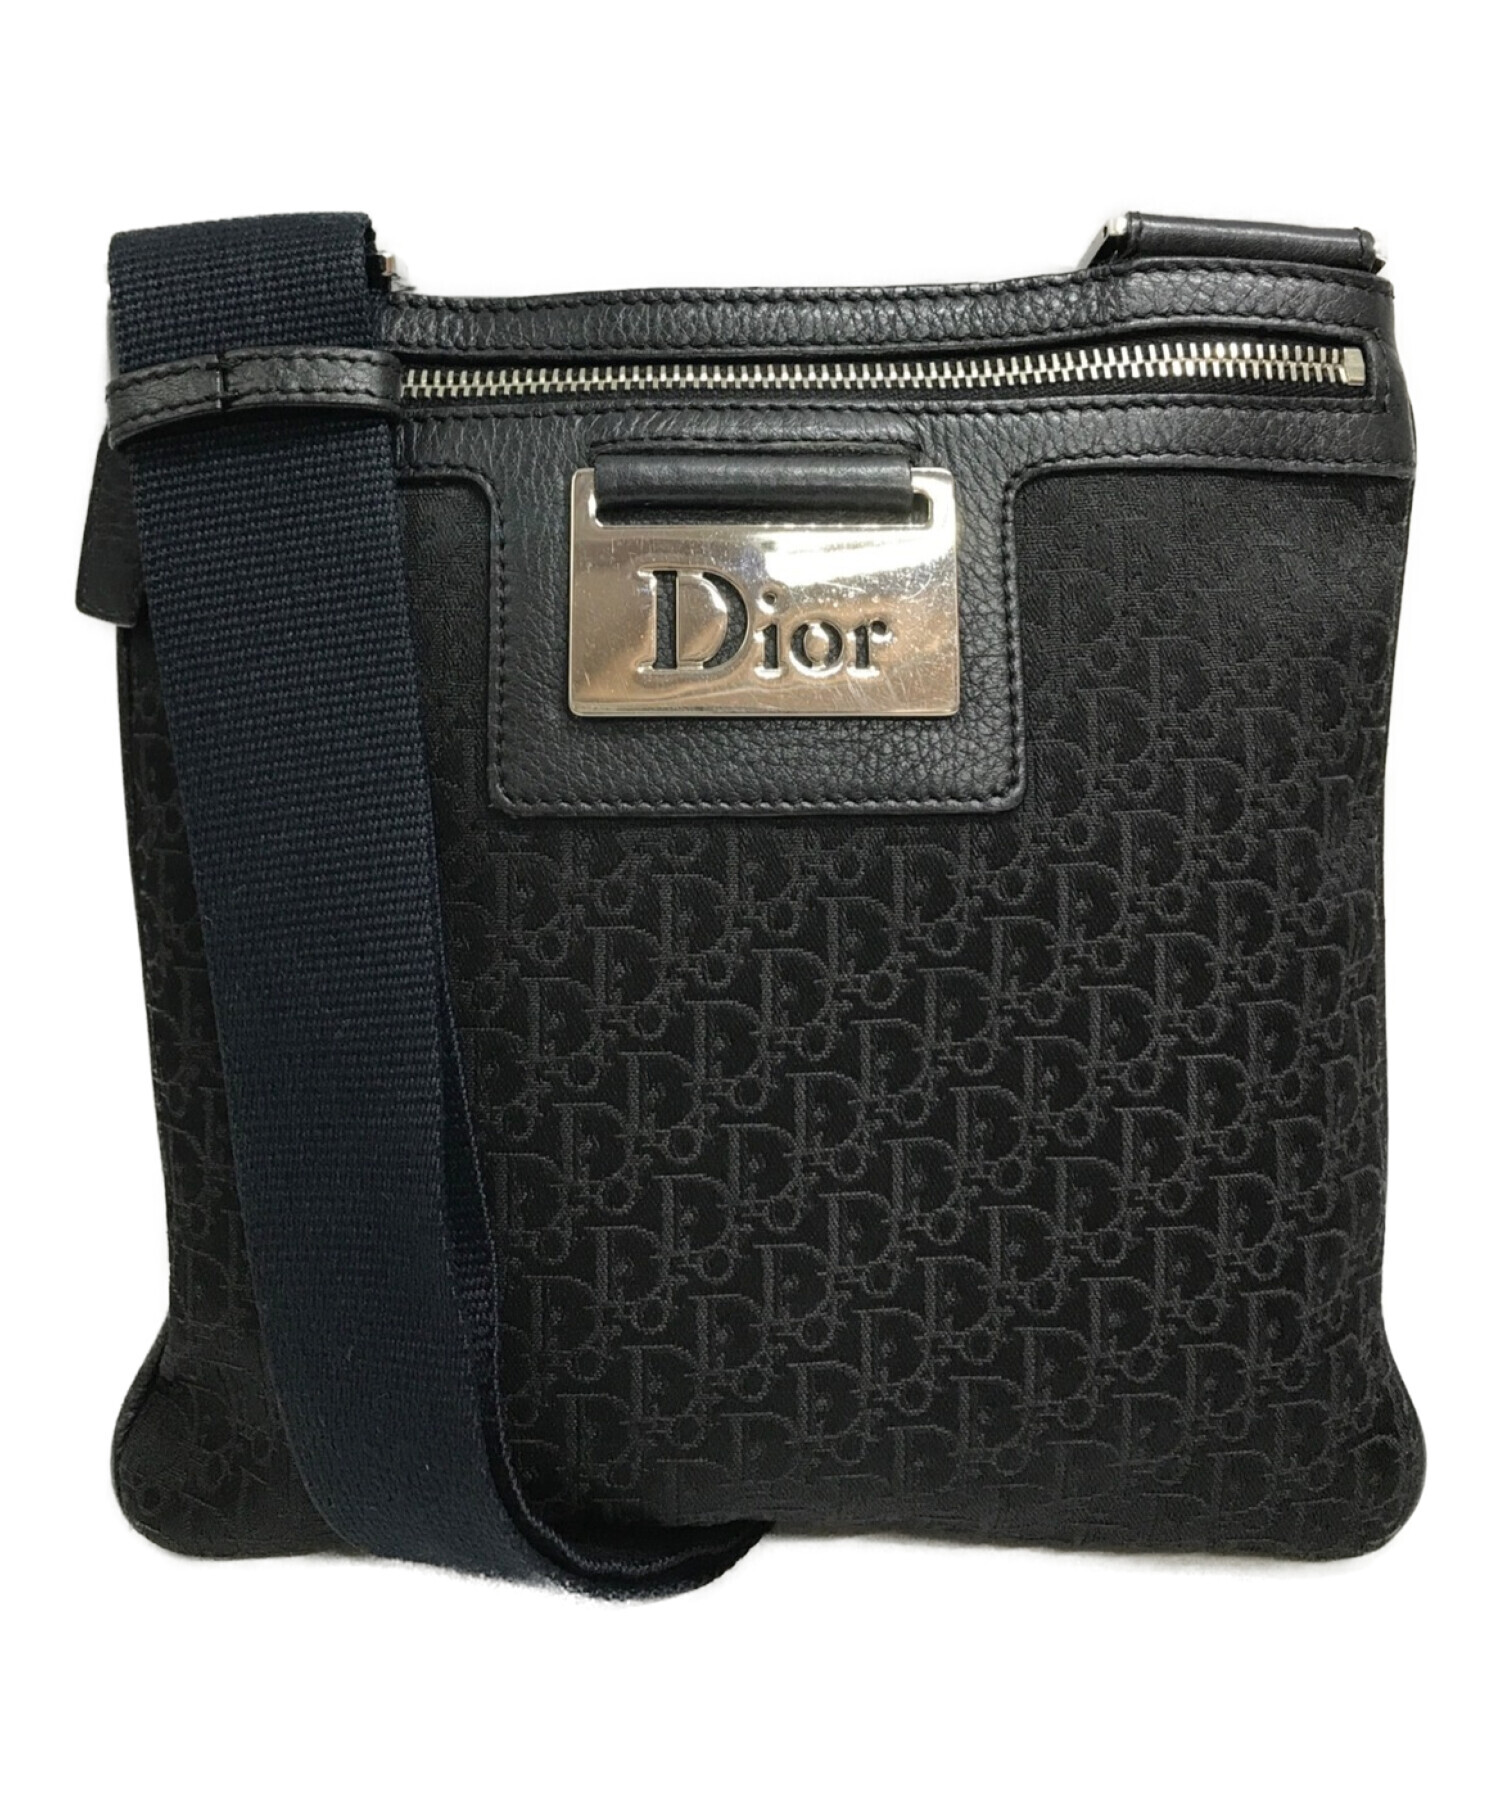 Christian Dior (クリスチャン ディオール) ショルダーバッグ ブラック